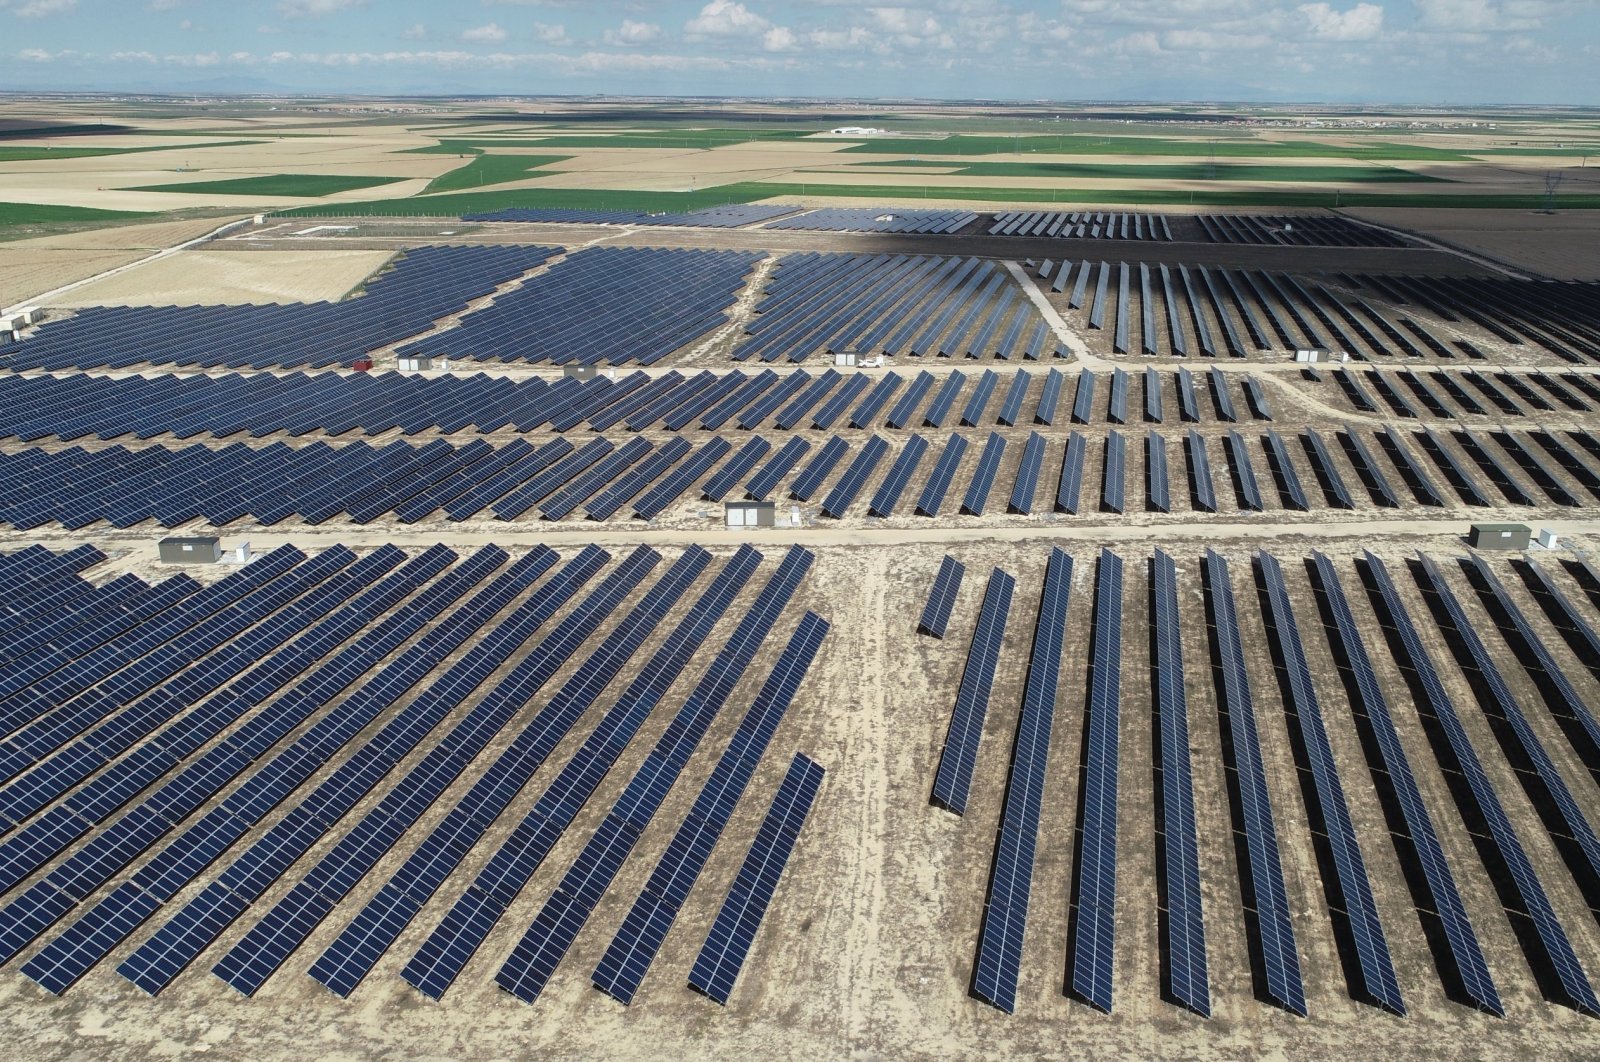 Solar panels are seen in the Karapınar district of the central Anatolian province of Konya, Türkiye, May 6, 2020. (AA Photo)